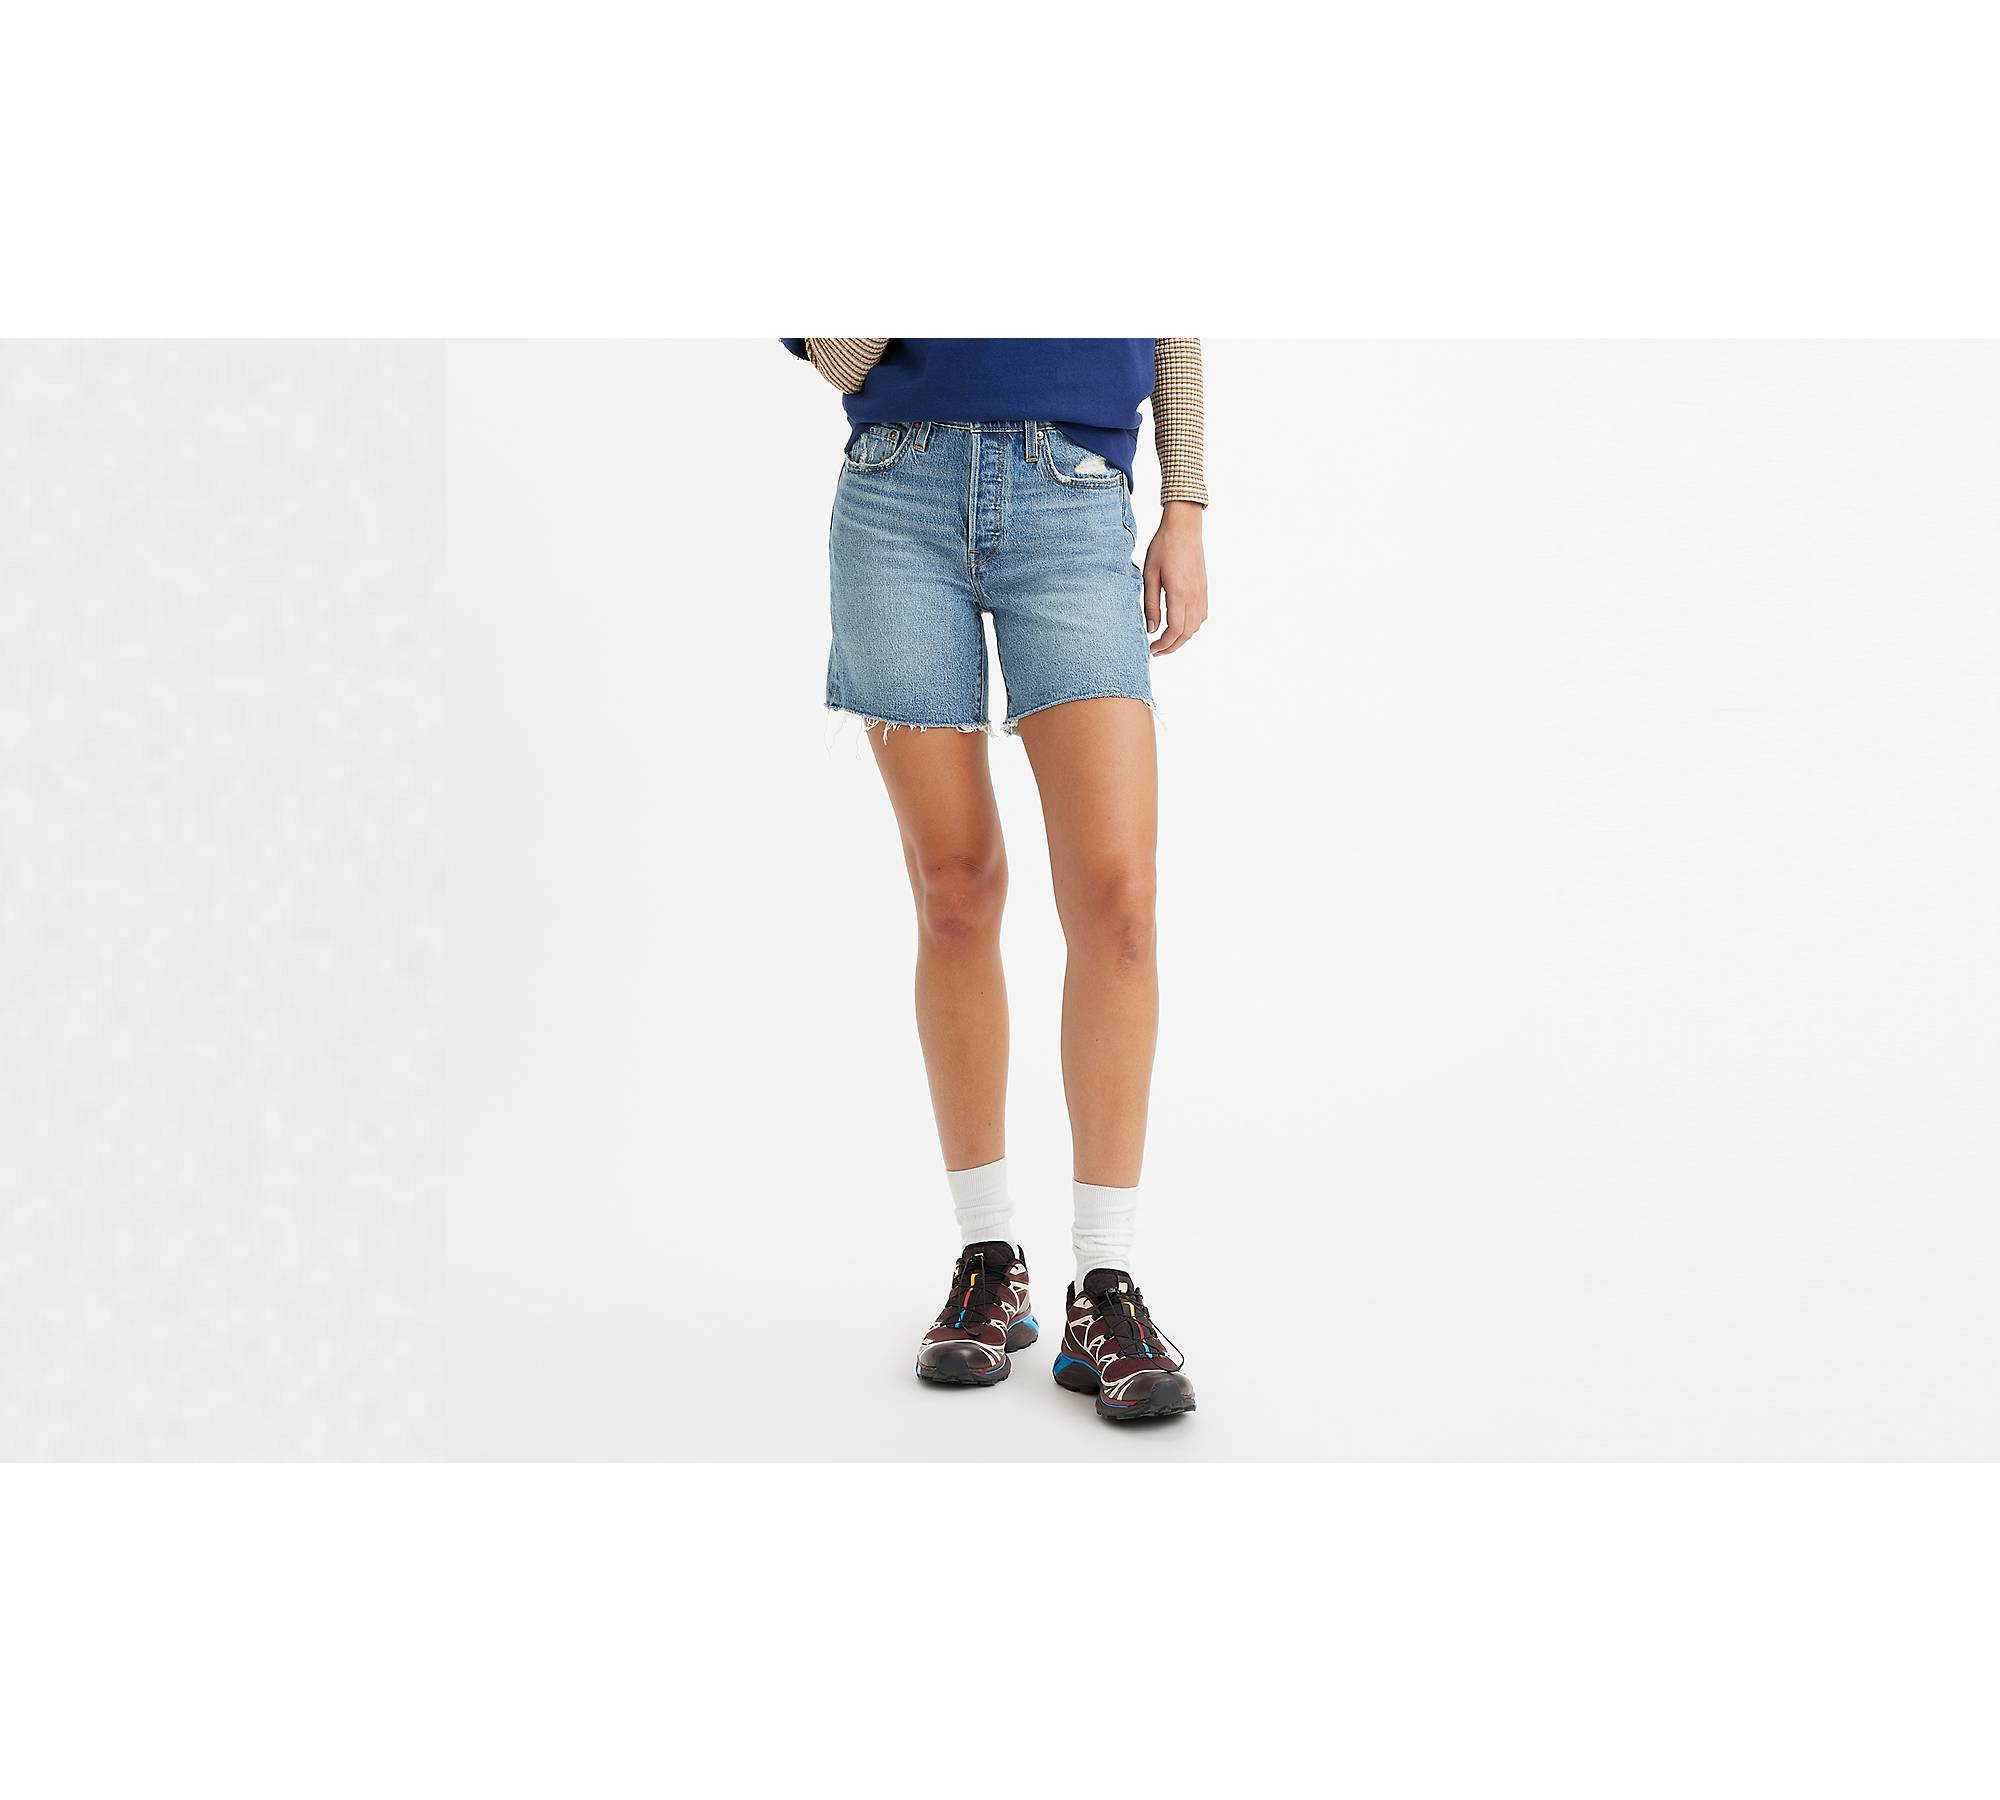 $25 - $50 Under $70 Upper-Thigh Length Shorts.